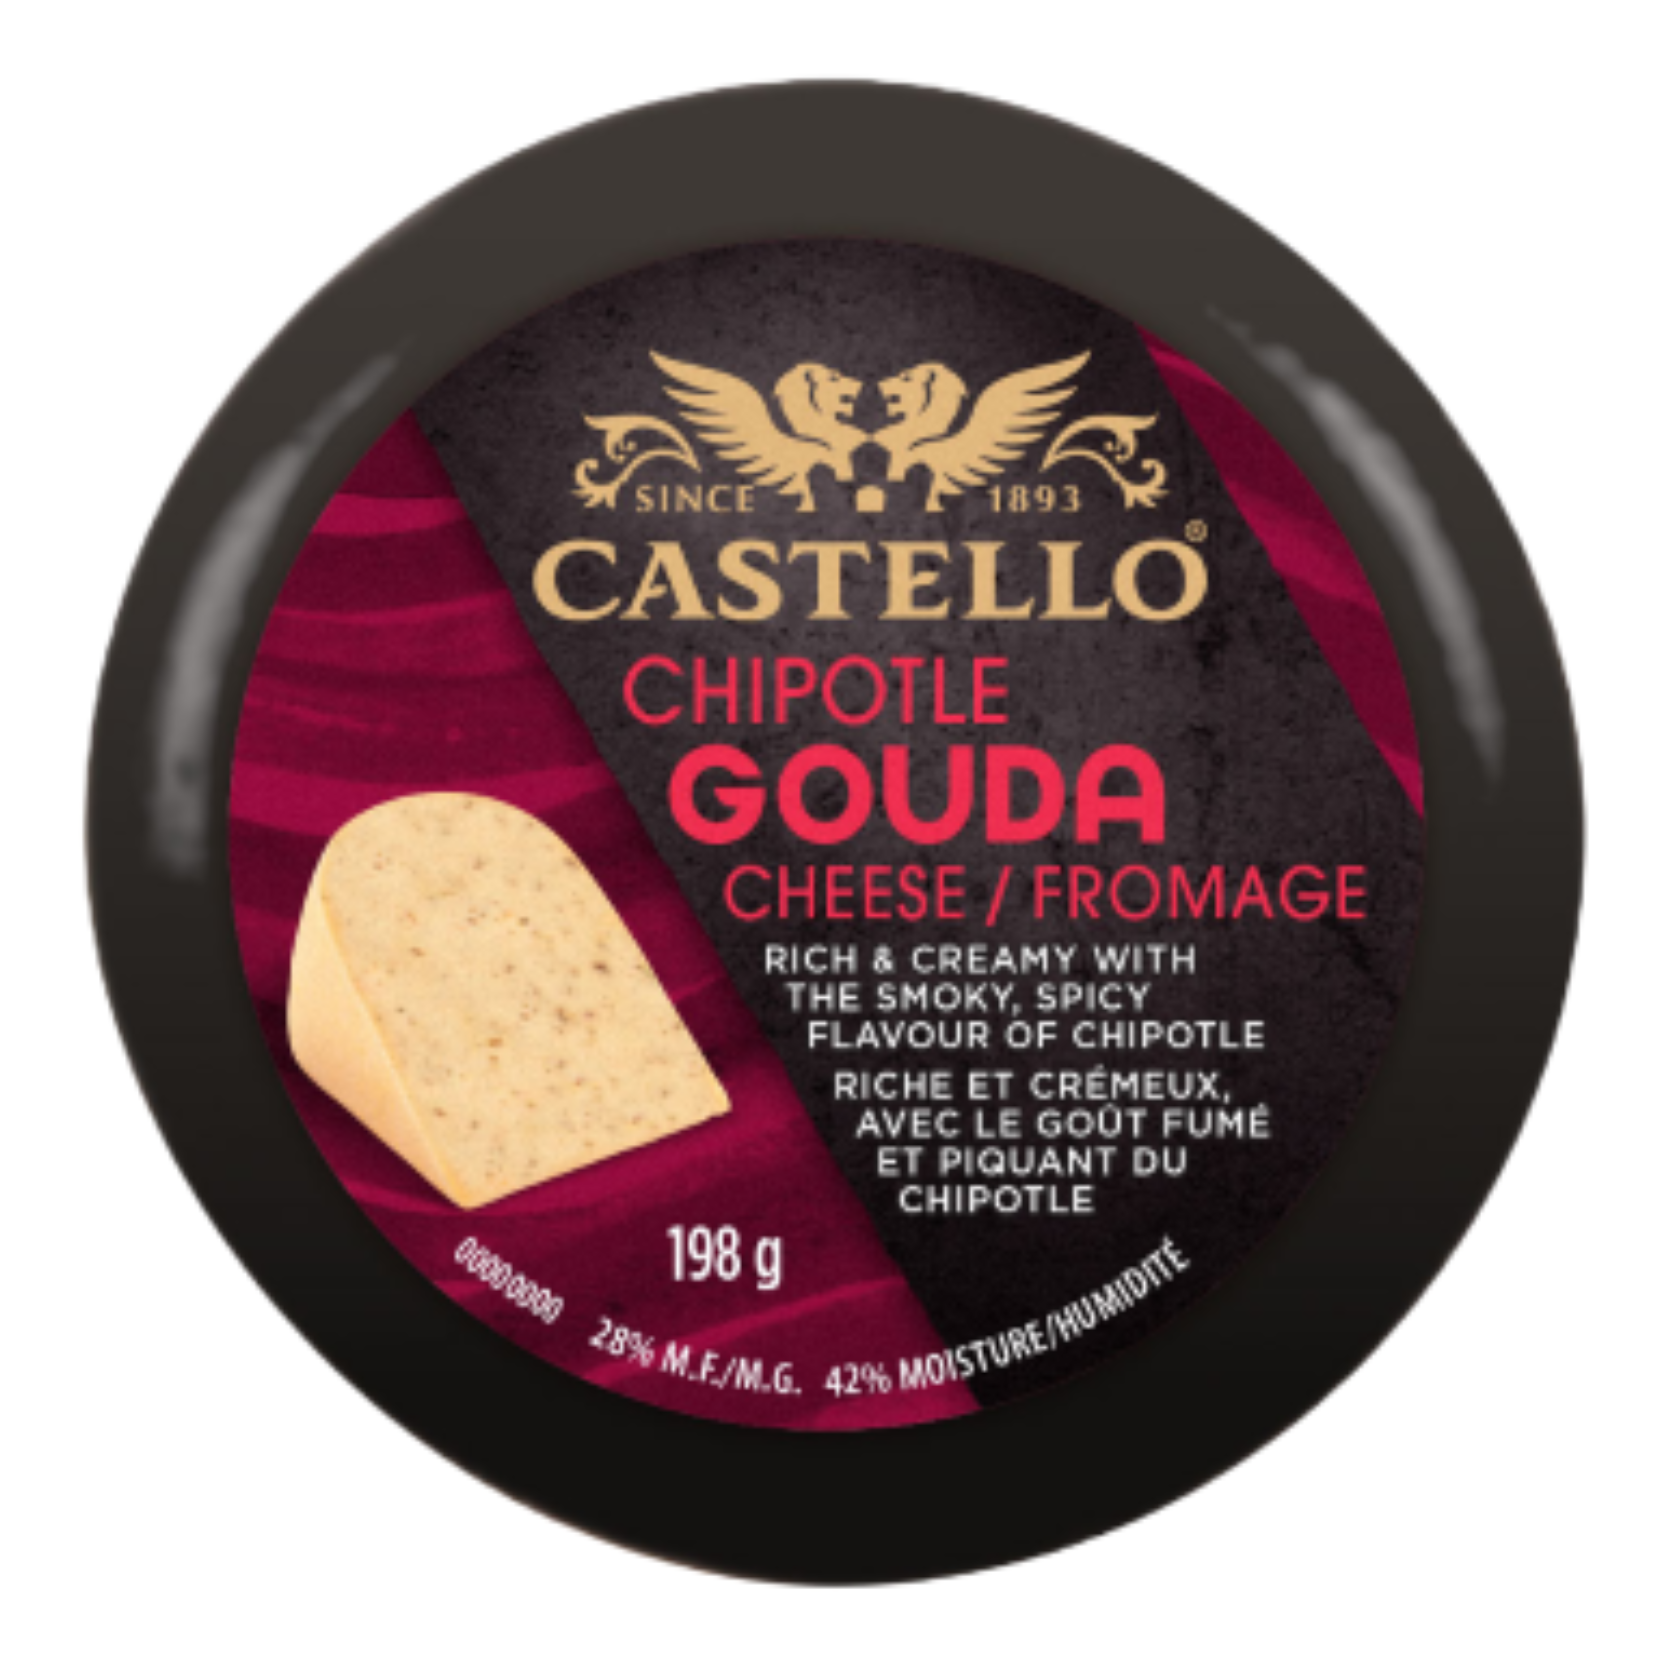 Castello Chipotle Gouda Cheese 198g